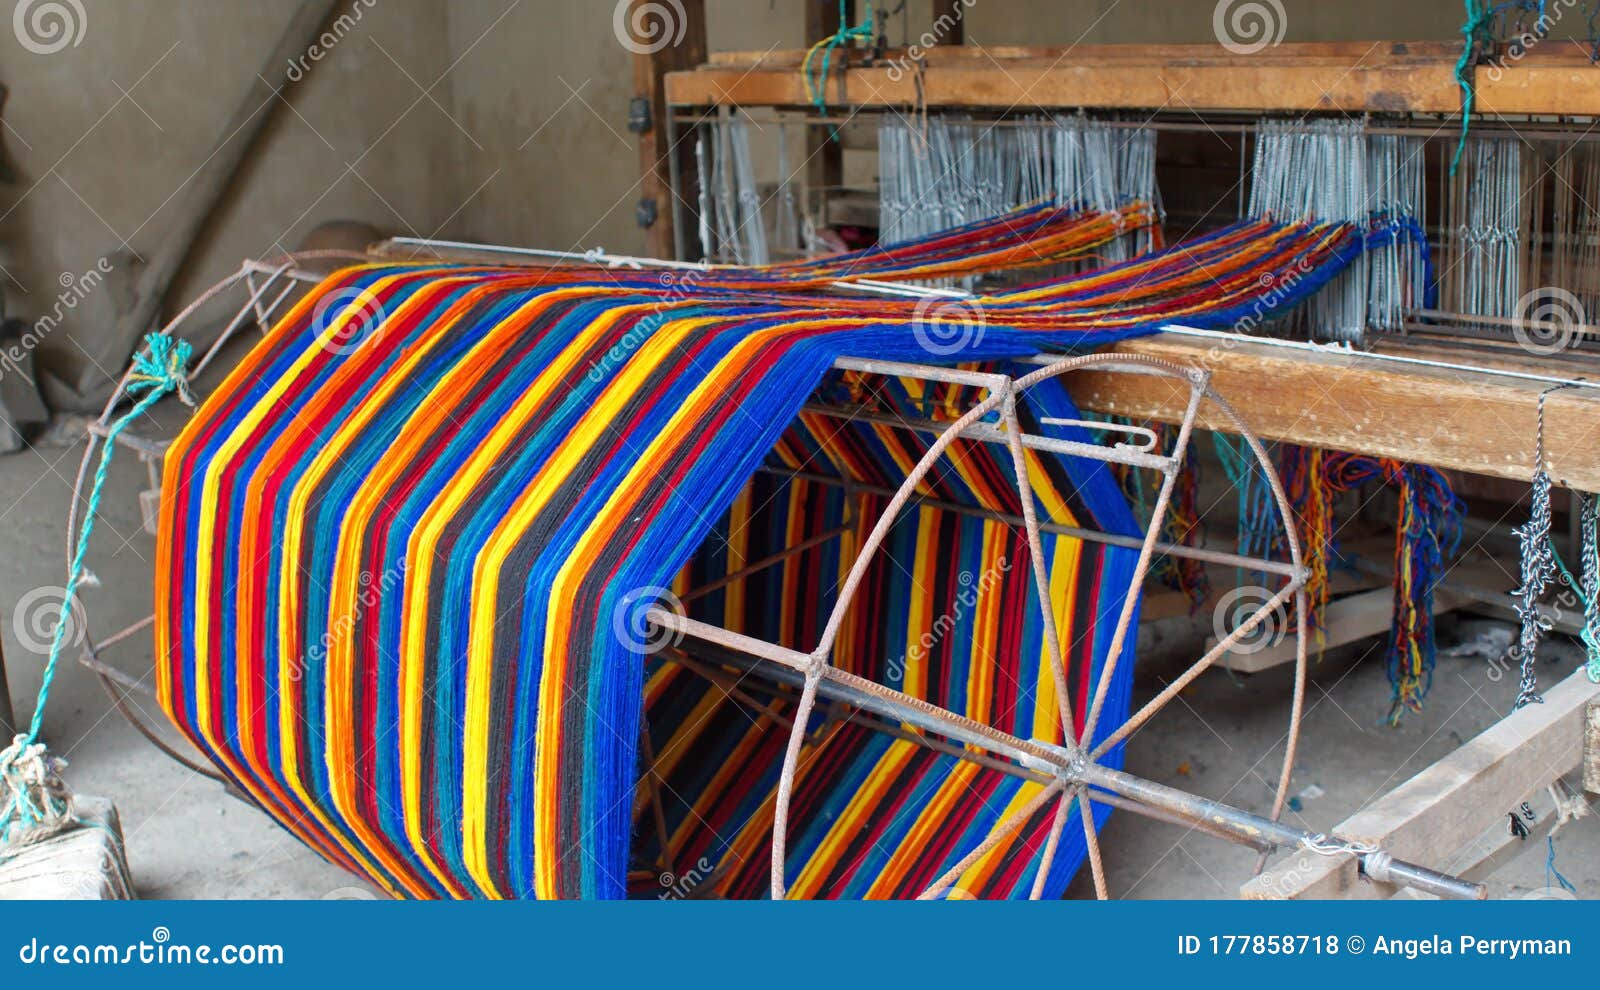 colorful thread on a loom